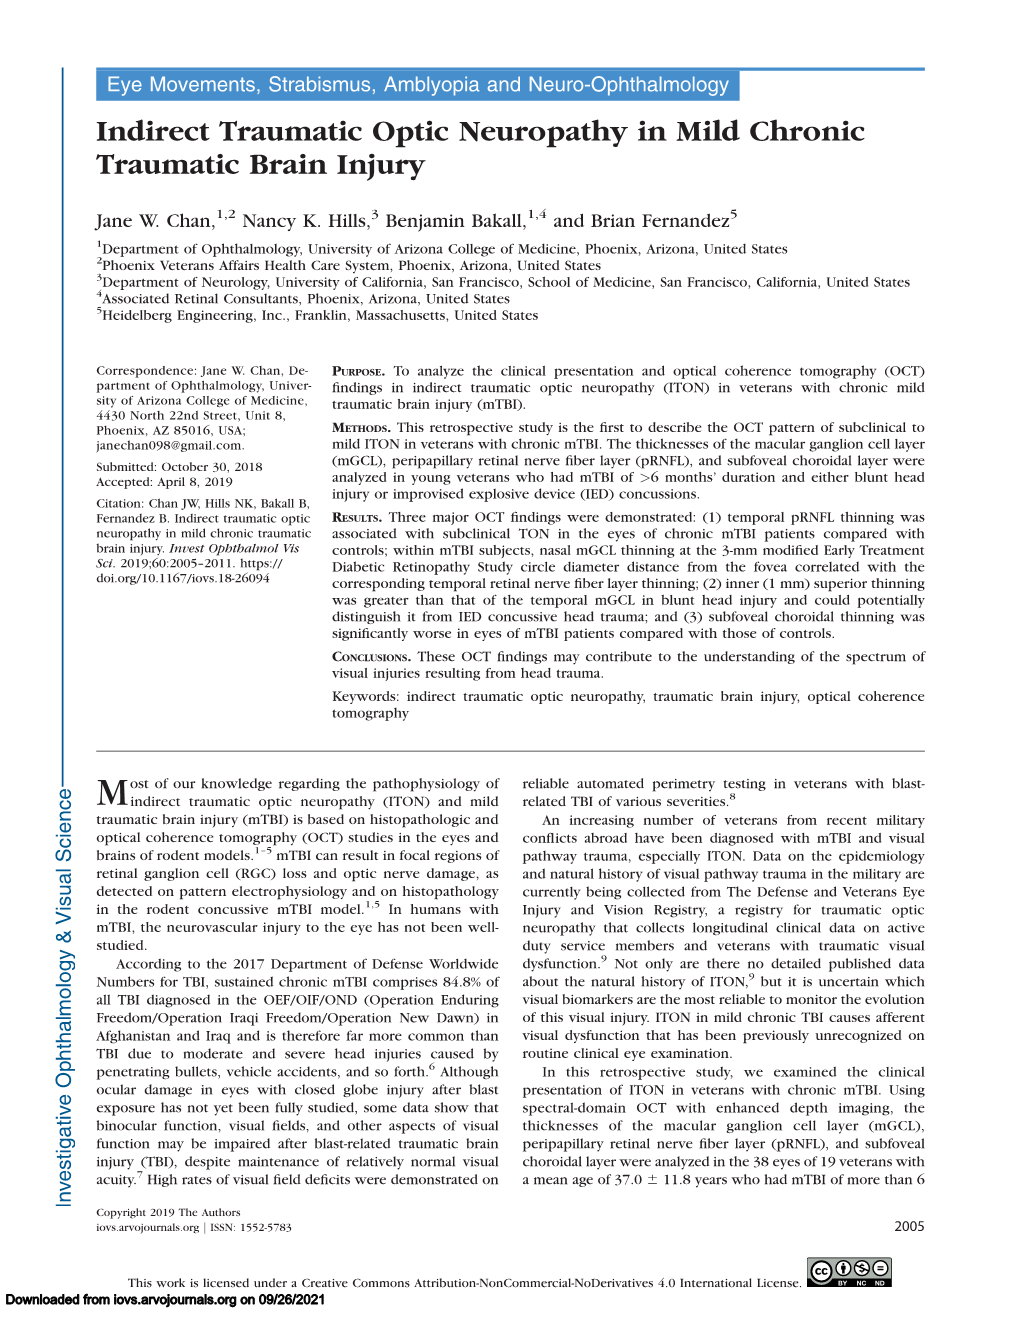 Indirect Traumatic Optic Neuropathy in Mild Chronic Traumatic Brain Injury